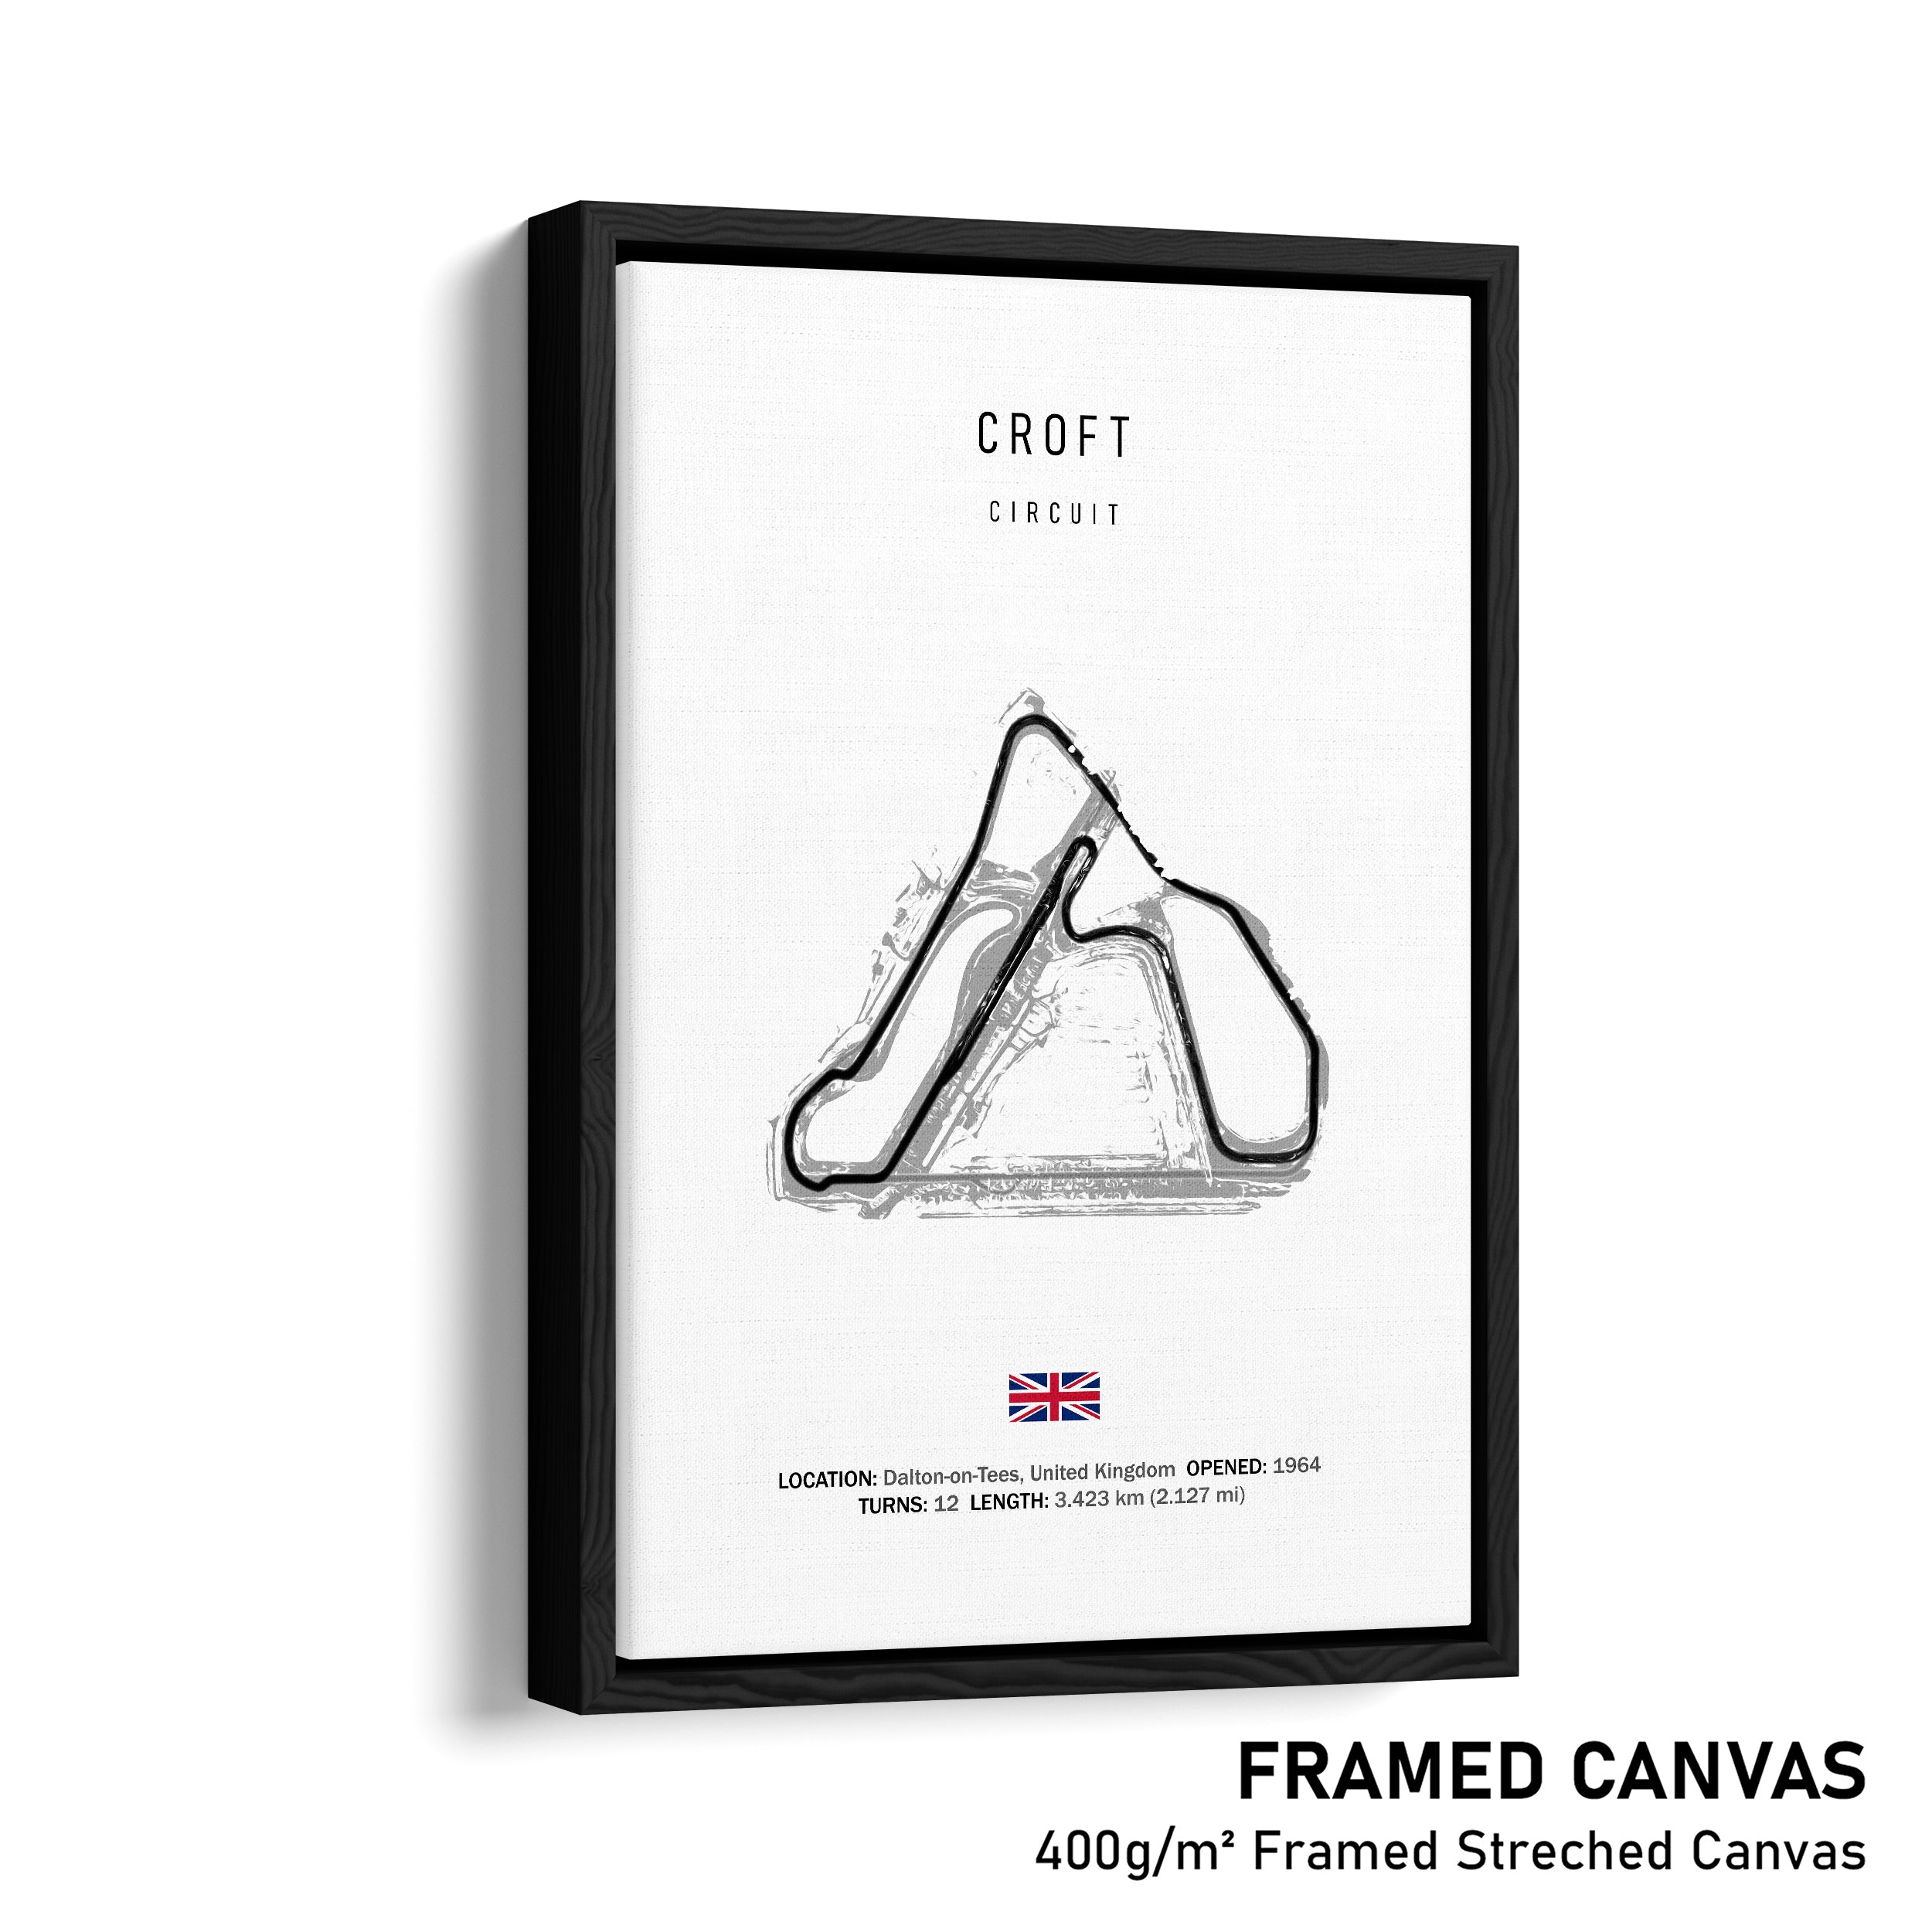 Croft Circuit - Racetrack Print